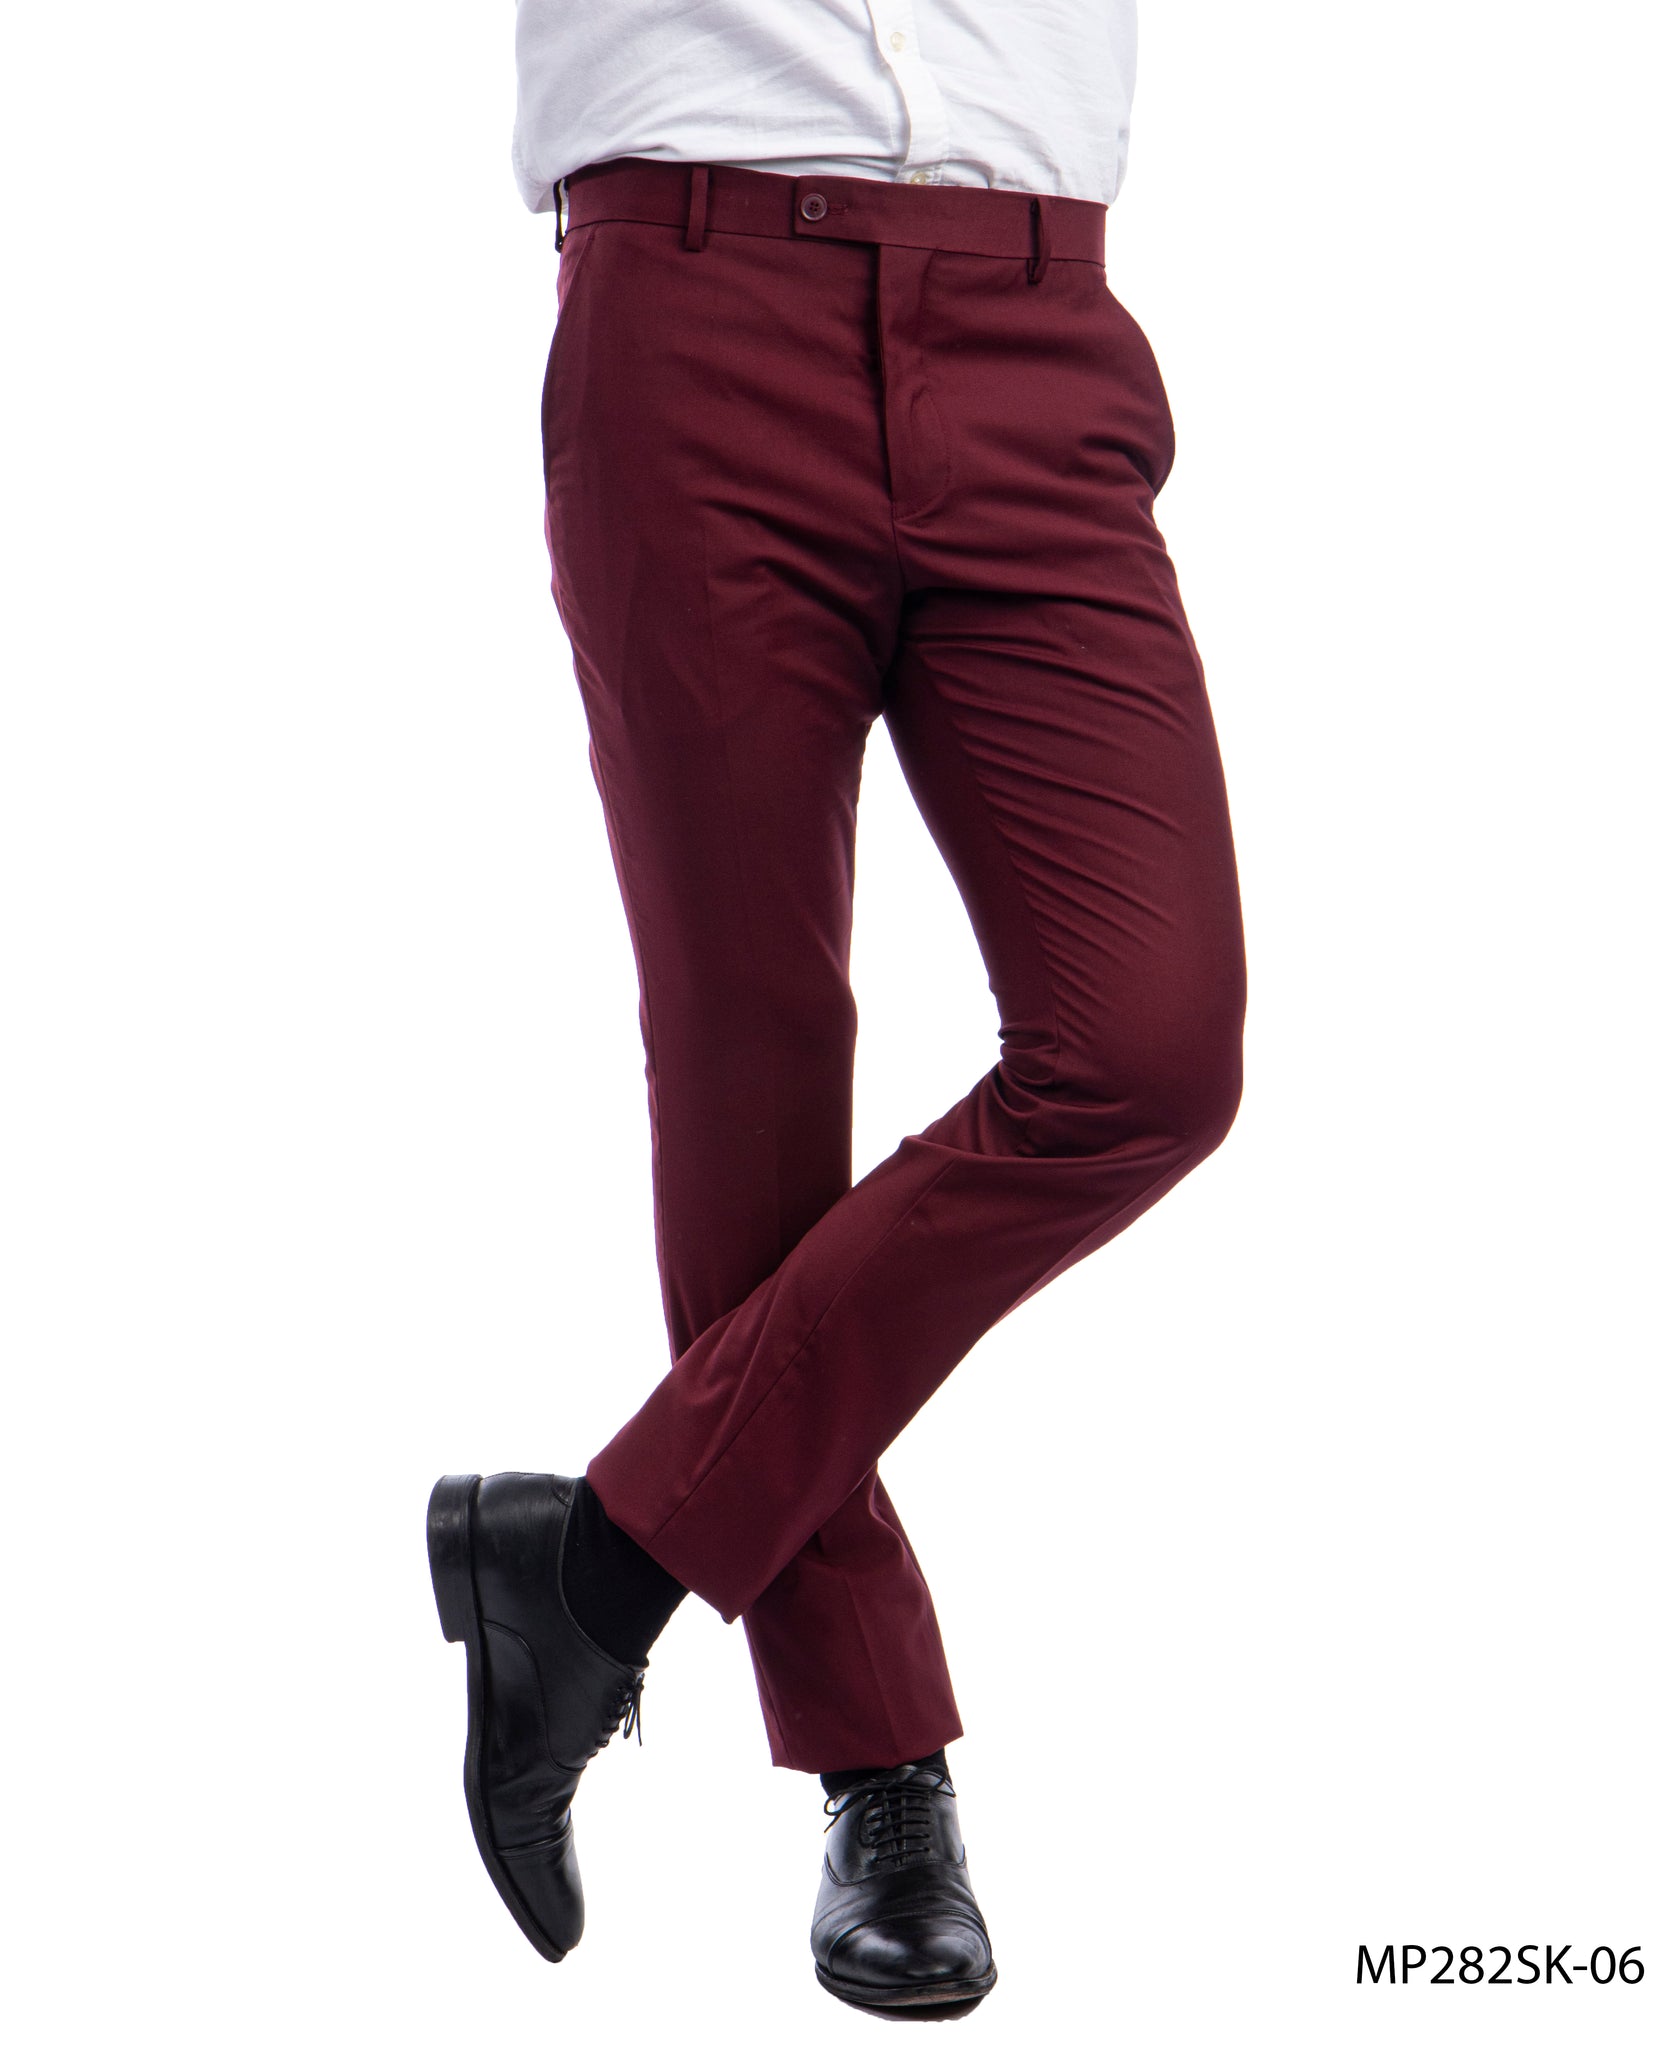 Sean Alexander Burgundy Performance Stretch Dress Pants For Men